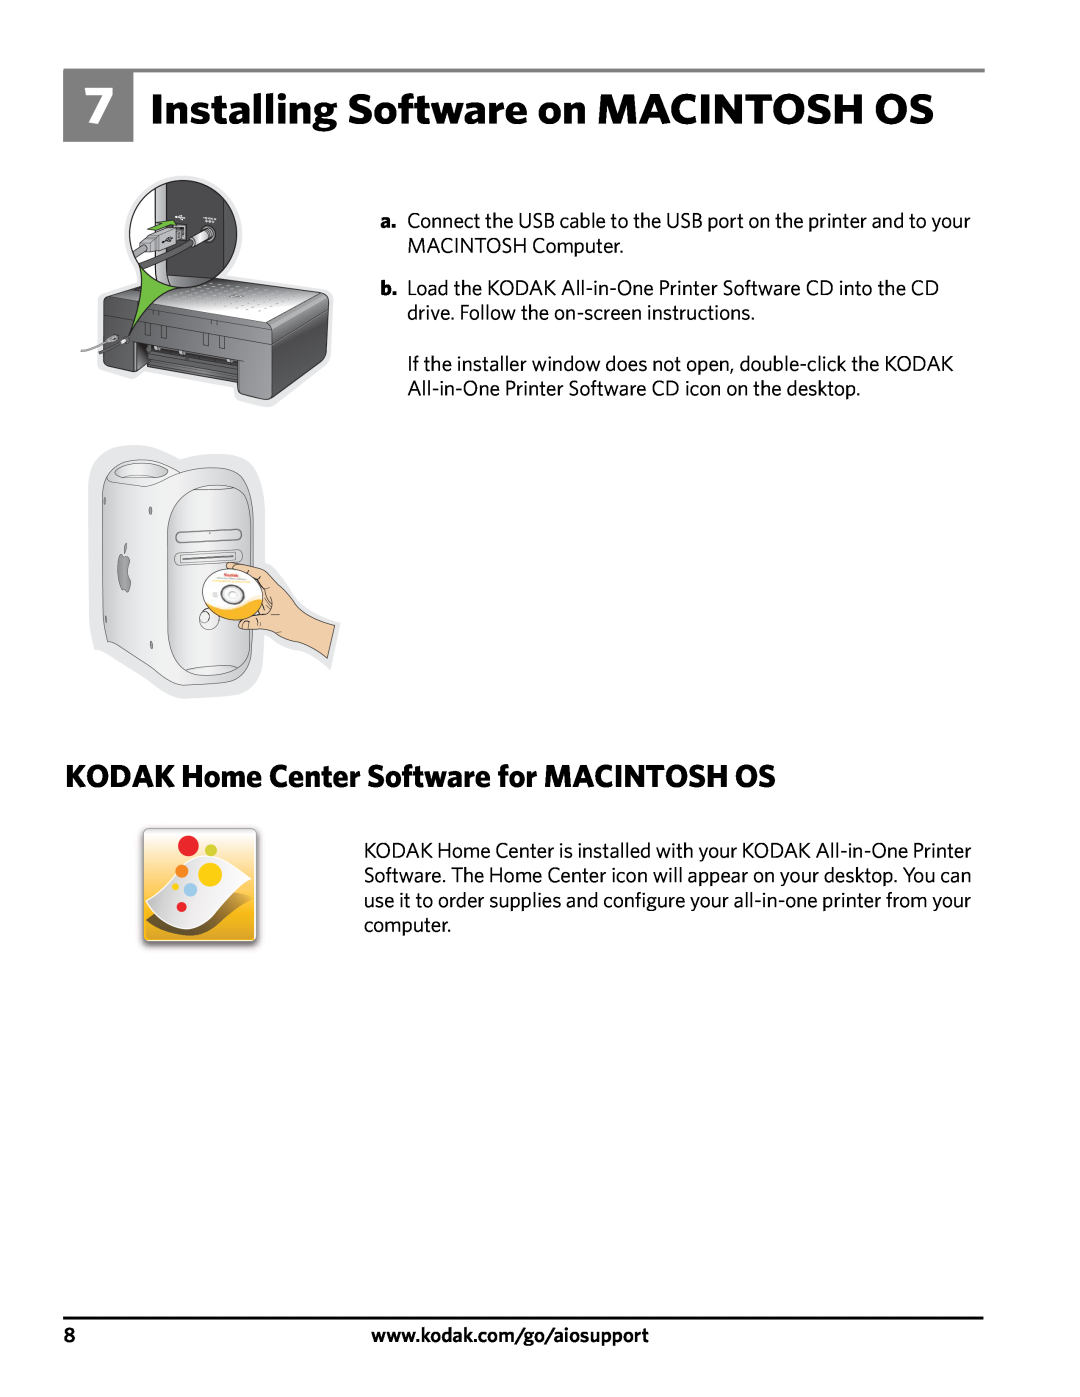 Kodak 3200 manual Installing Software on MACINTOSH OS, KODAK Home Center Software for MACINTOSH OS 